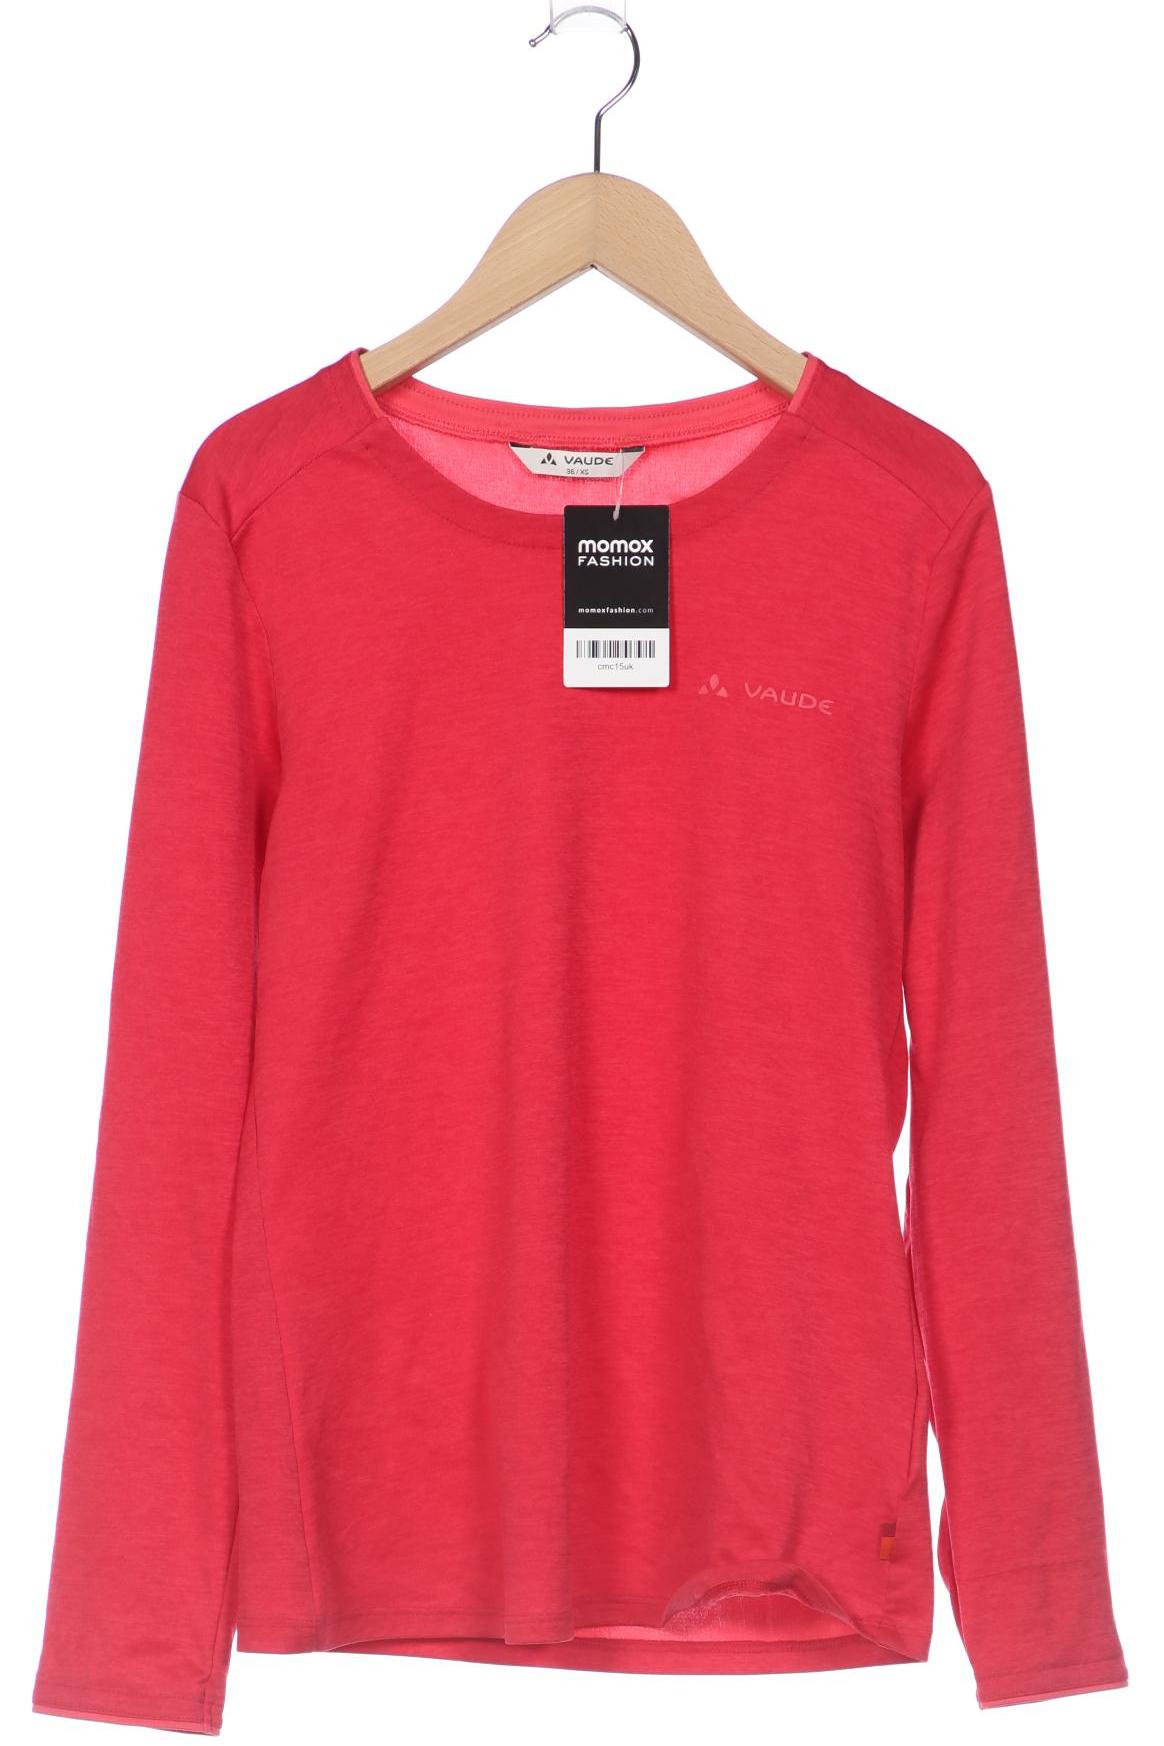 Vaude Damen T-Shirt, rot, Gr. 36 von Vaude